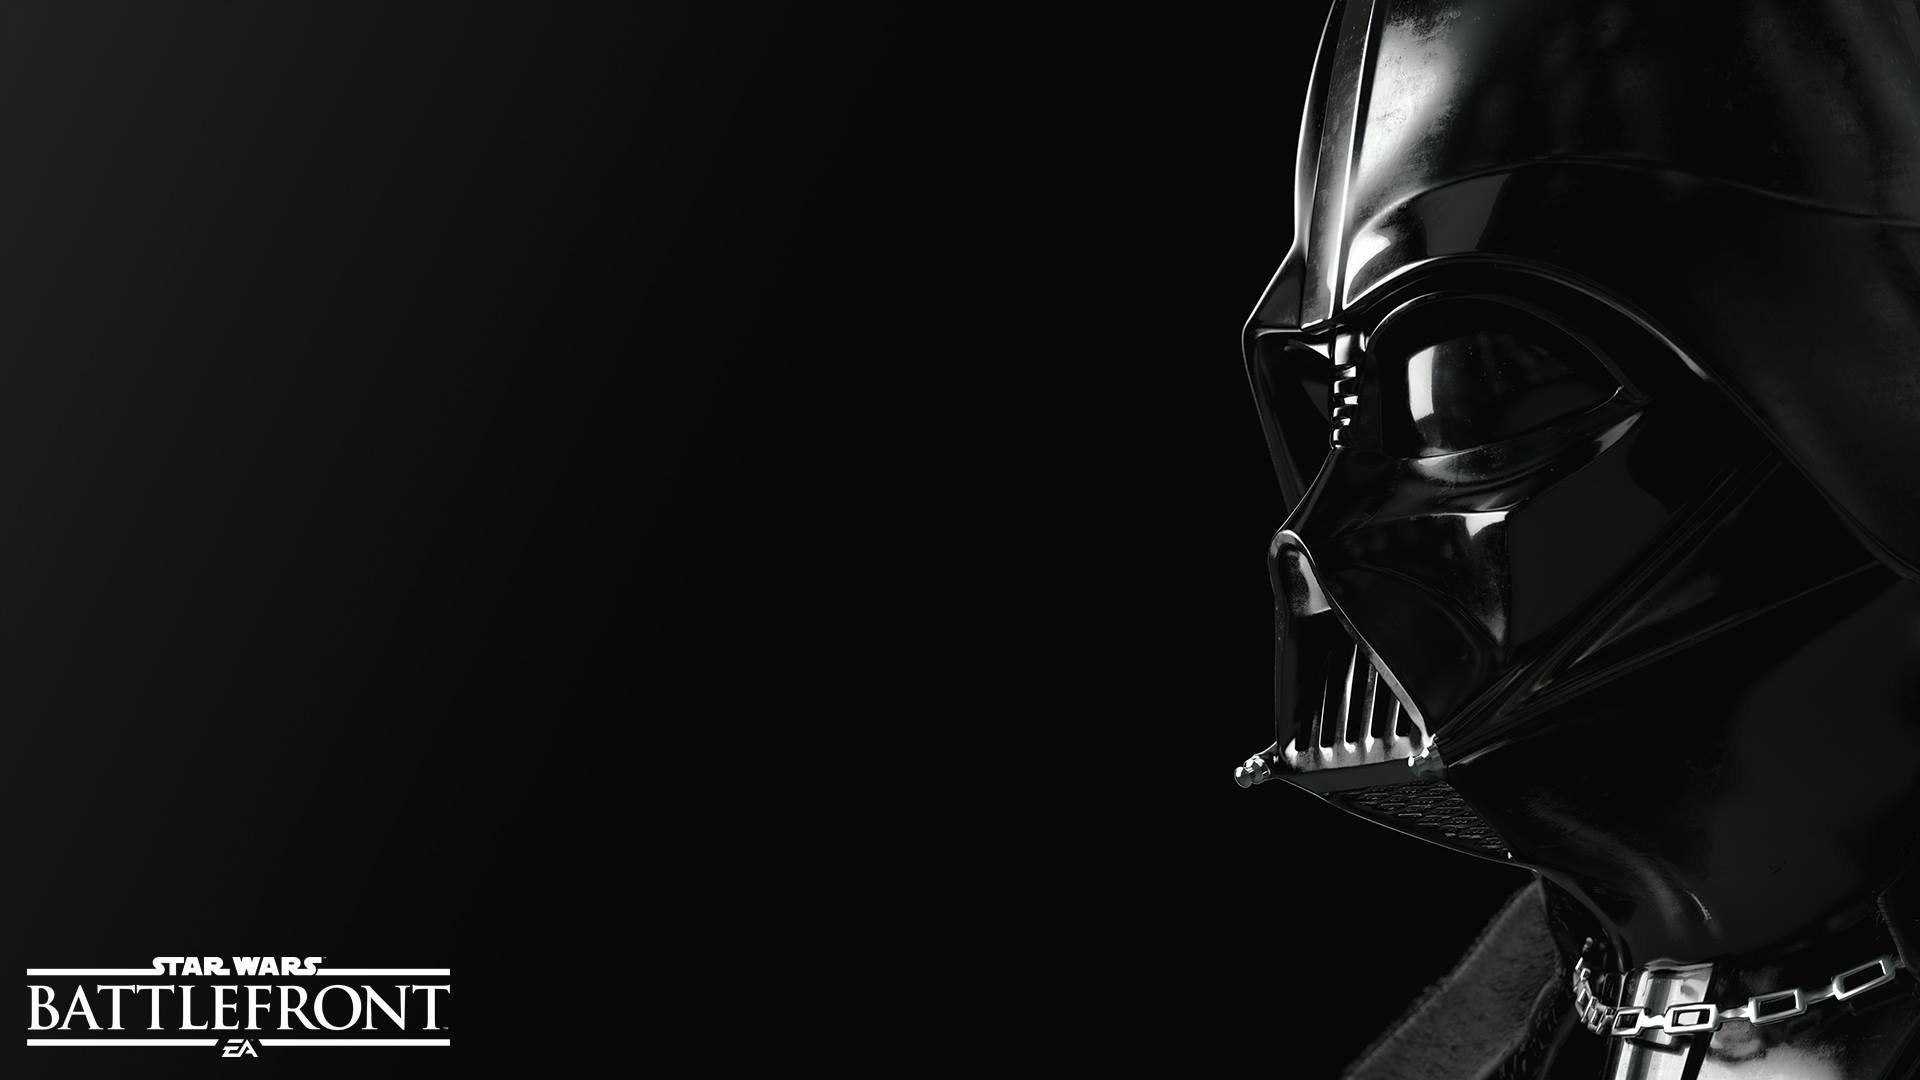 Star Wars Battlefront (2015) HD Wallpaper